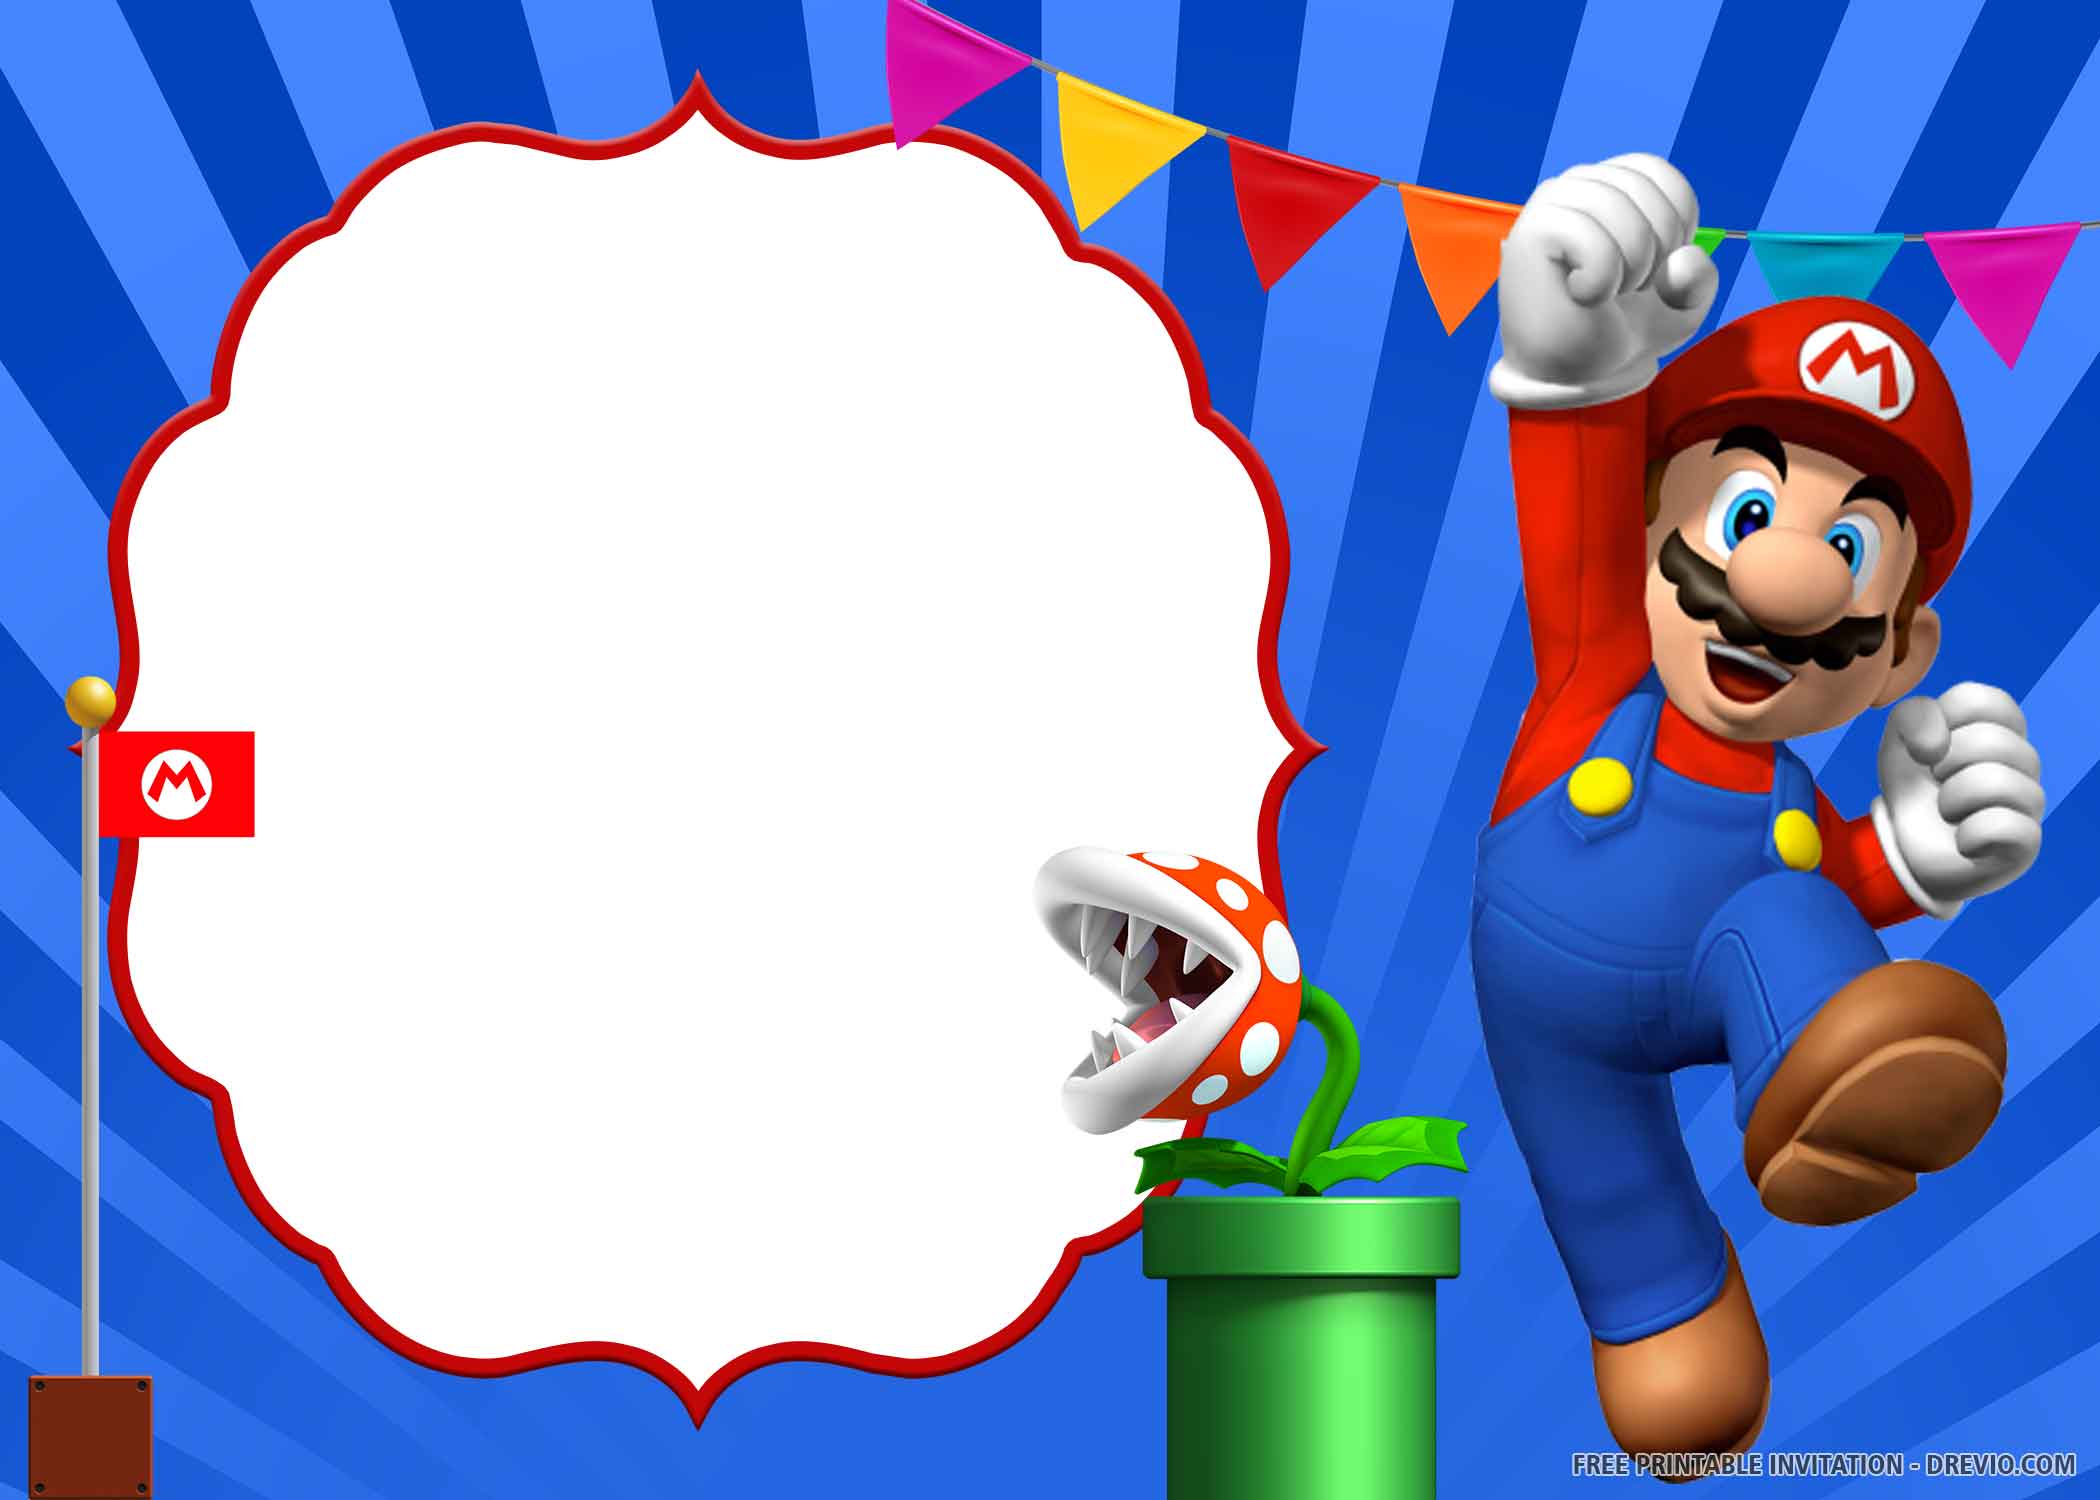 (FREE PRINTABLE) Super Mario Birthday Invitation Templates Download